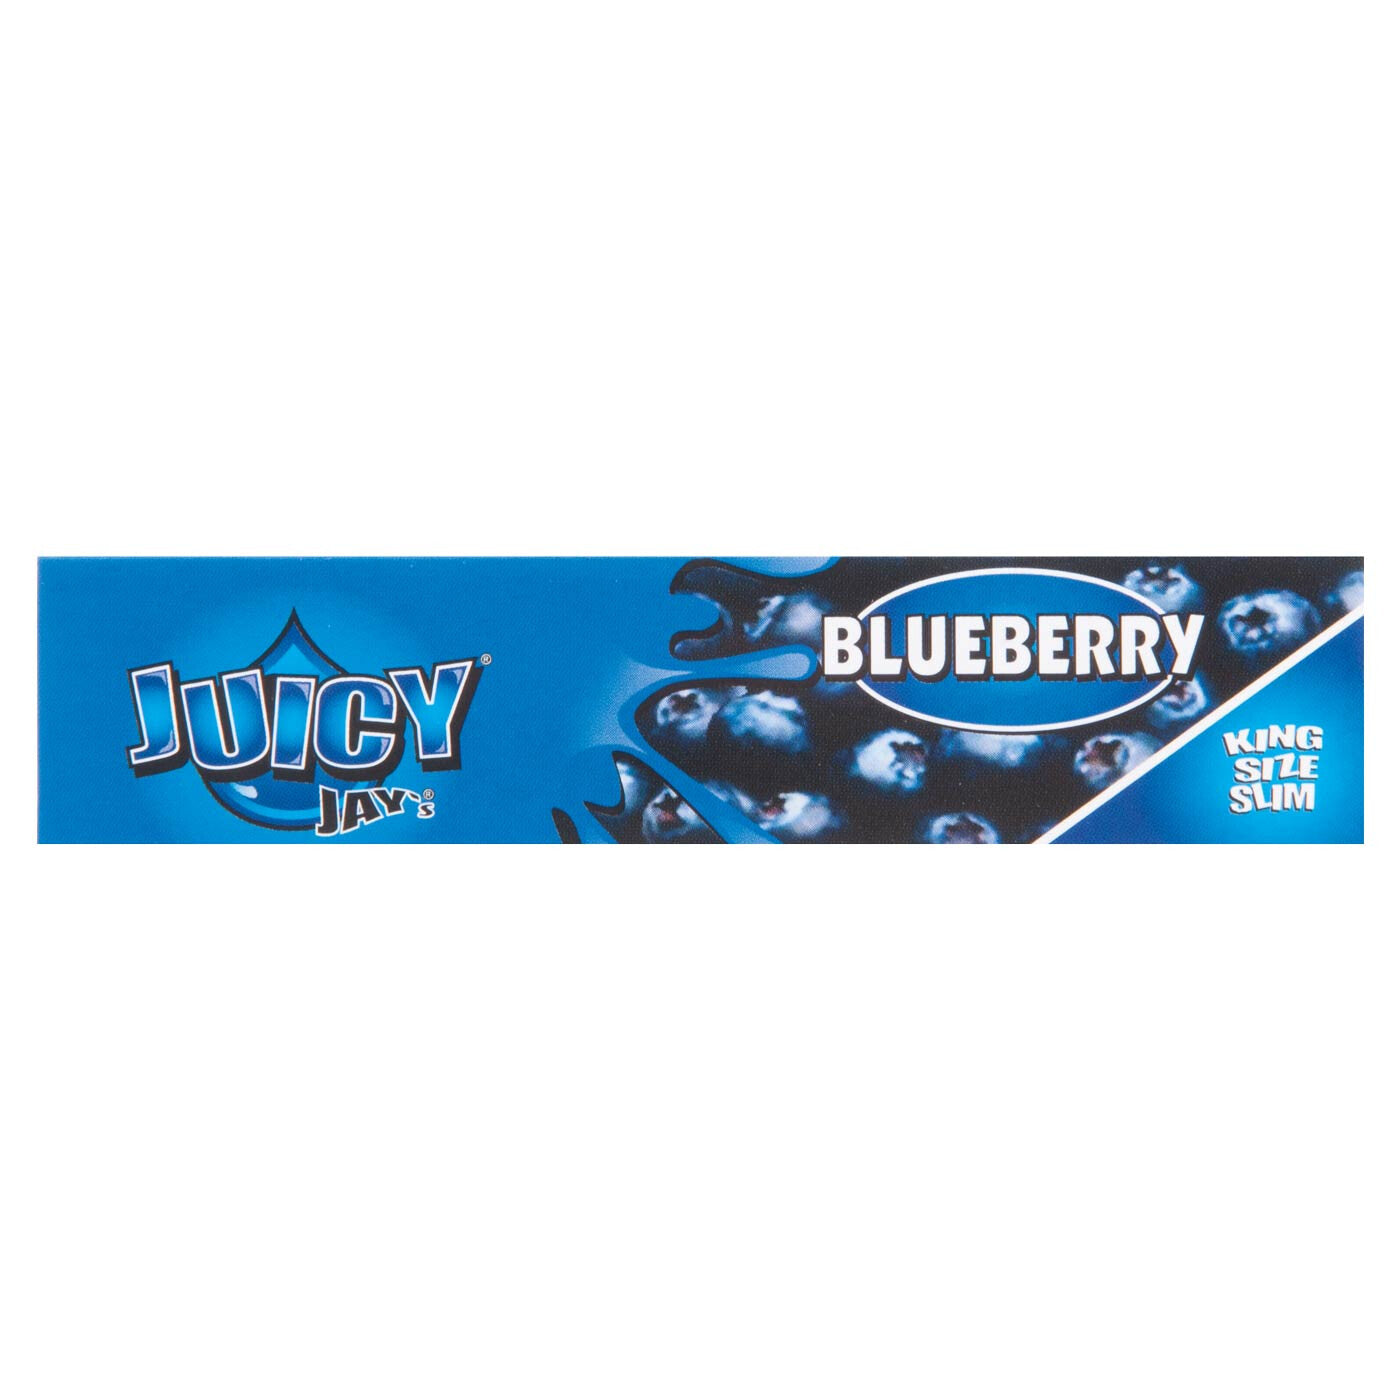 Juicy Jays Blueberry Kss 1 PC voorkant